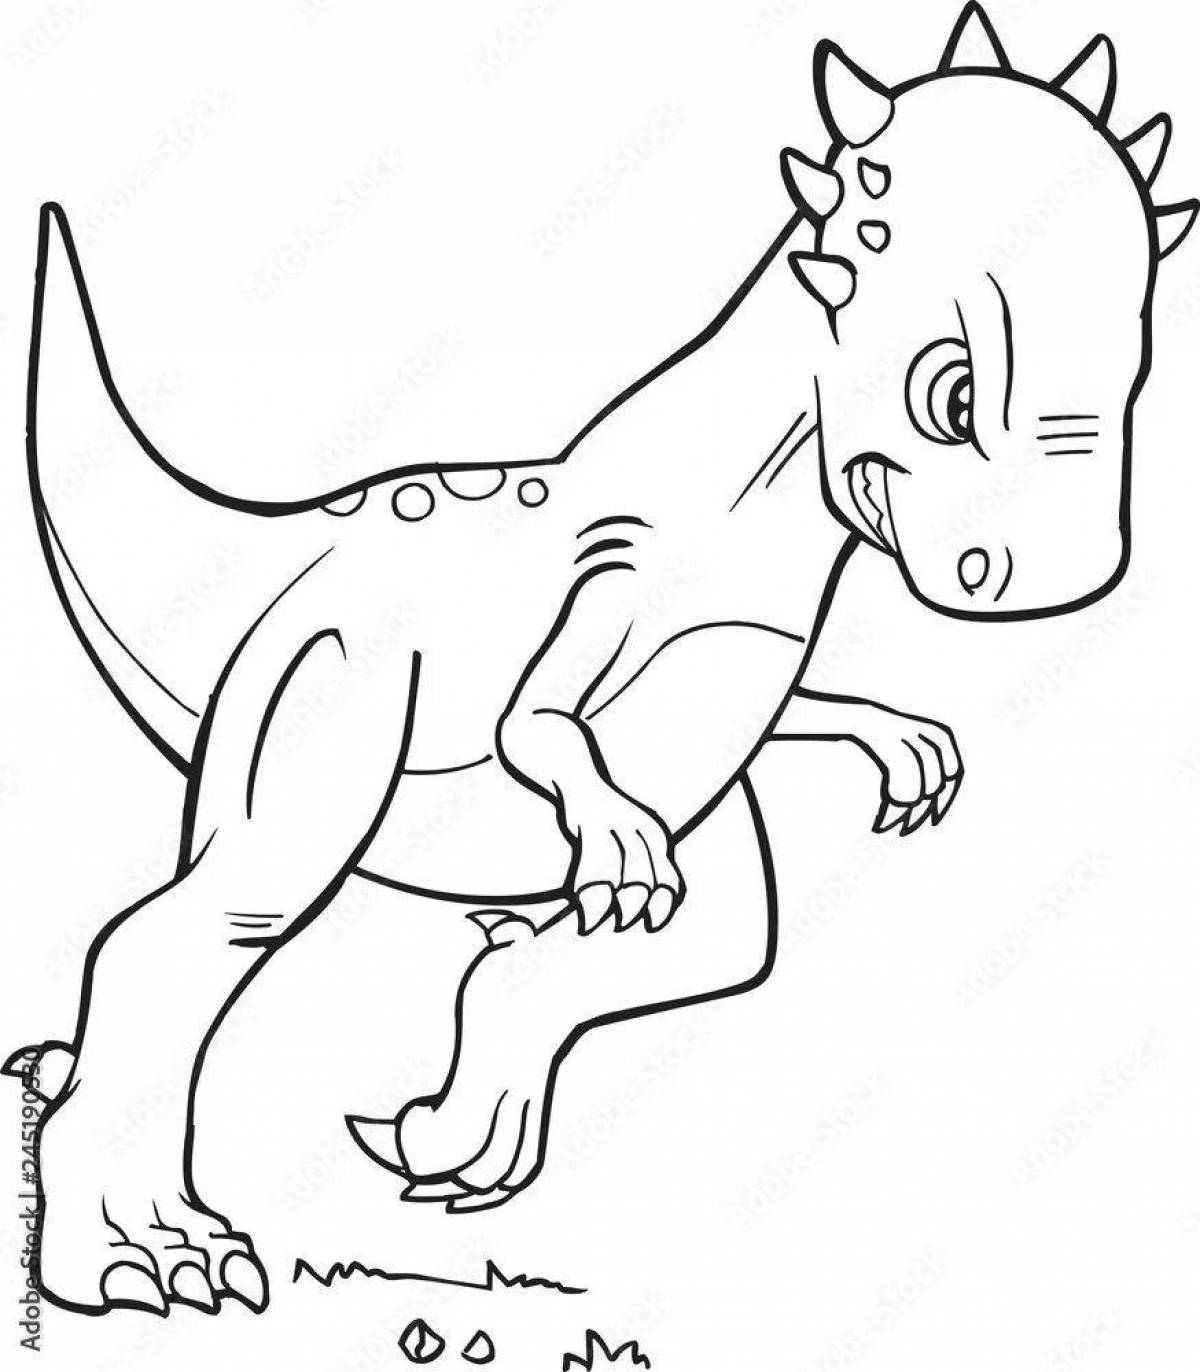 Incredible pachycephalosaurus coloring book